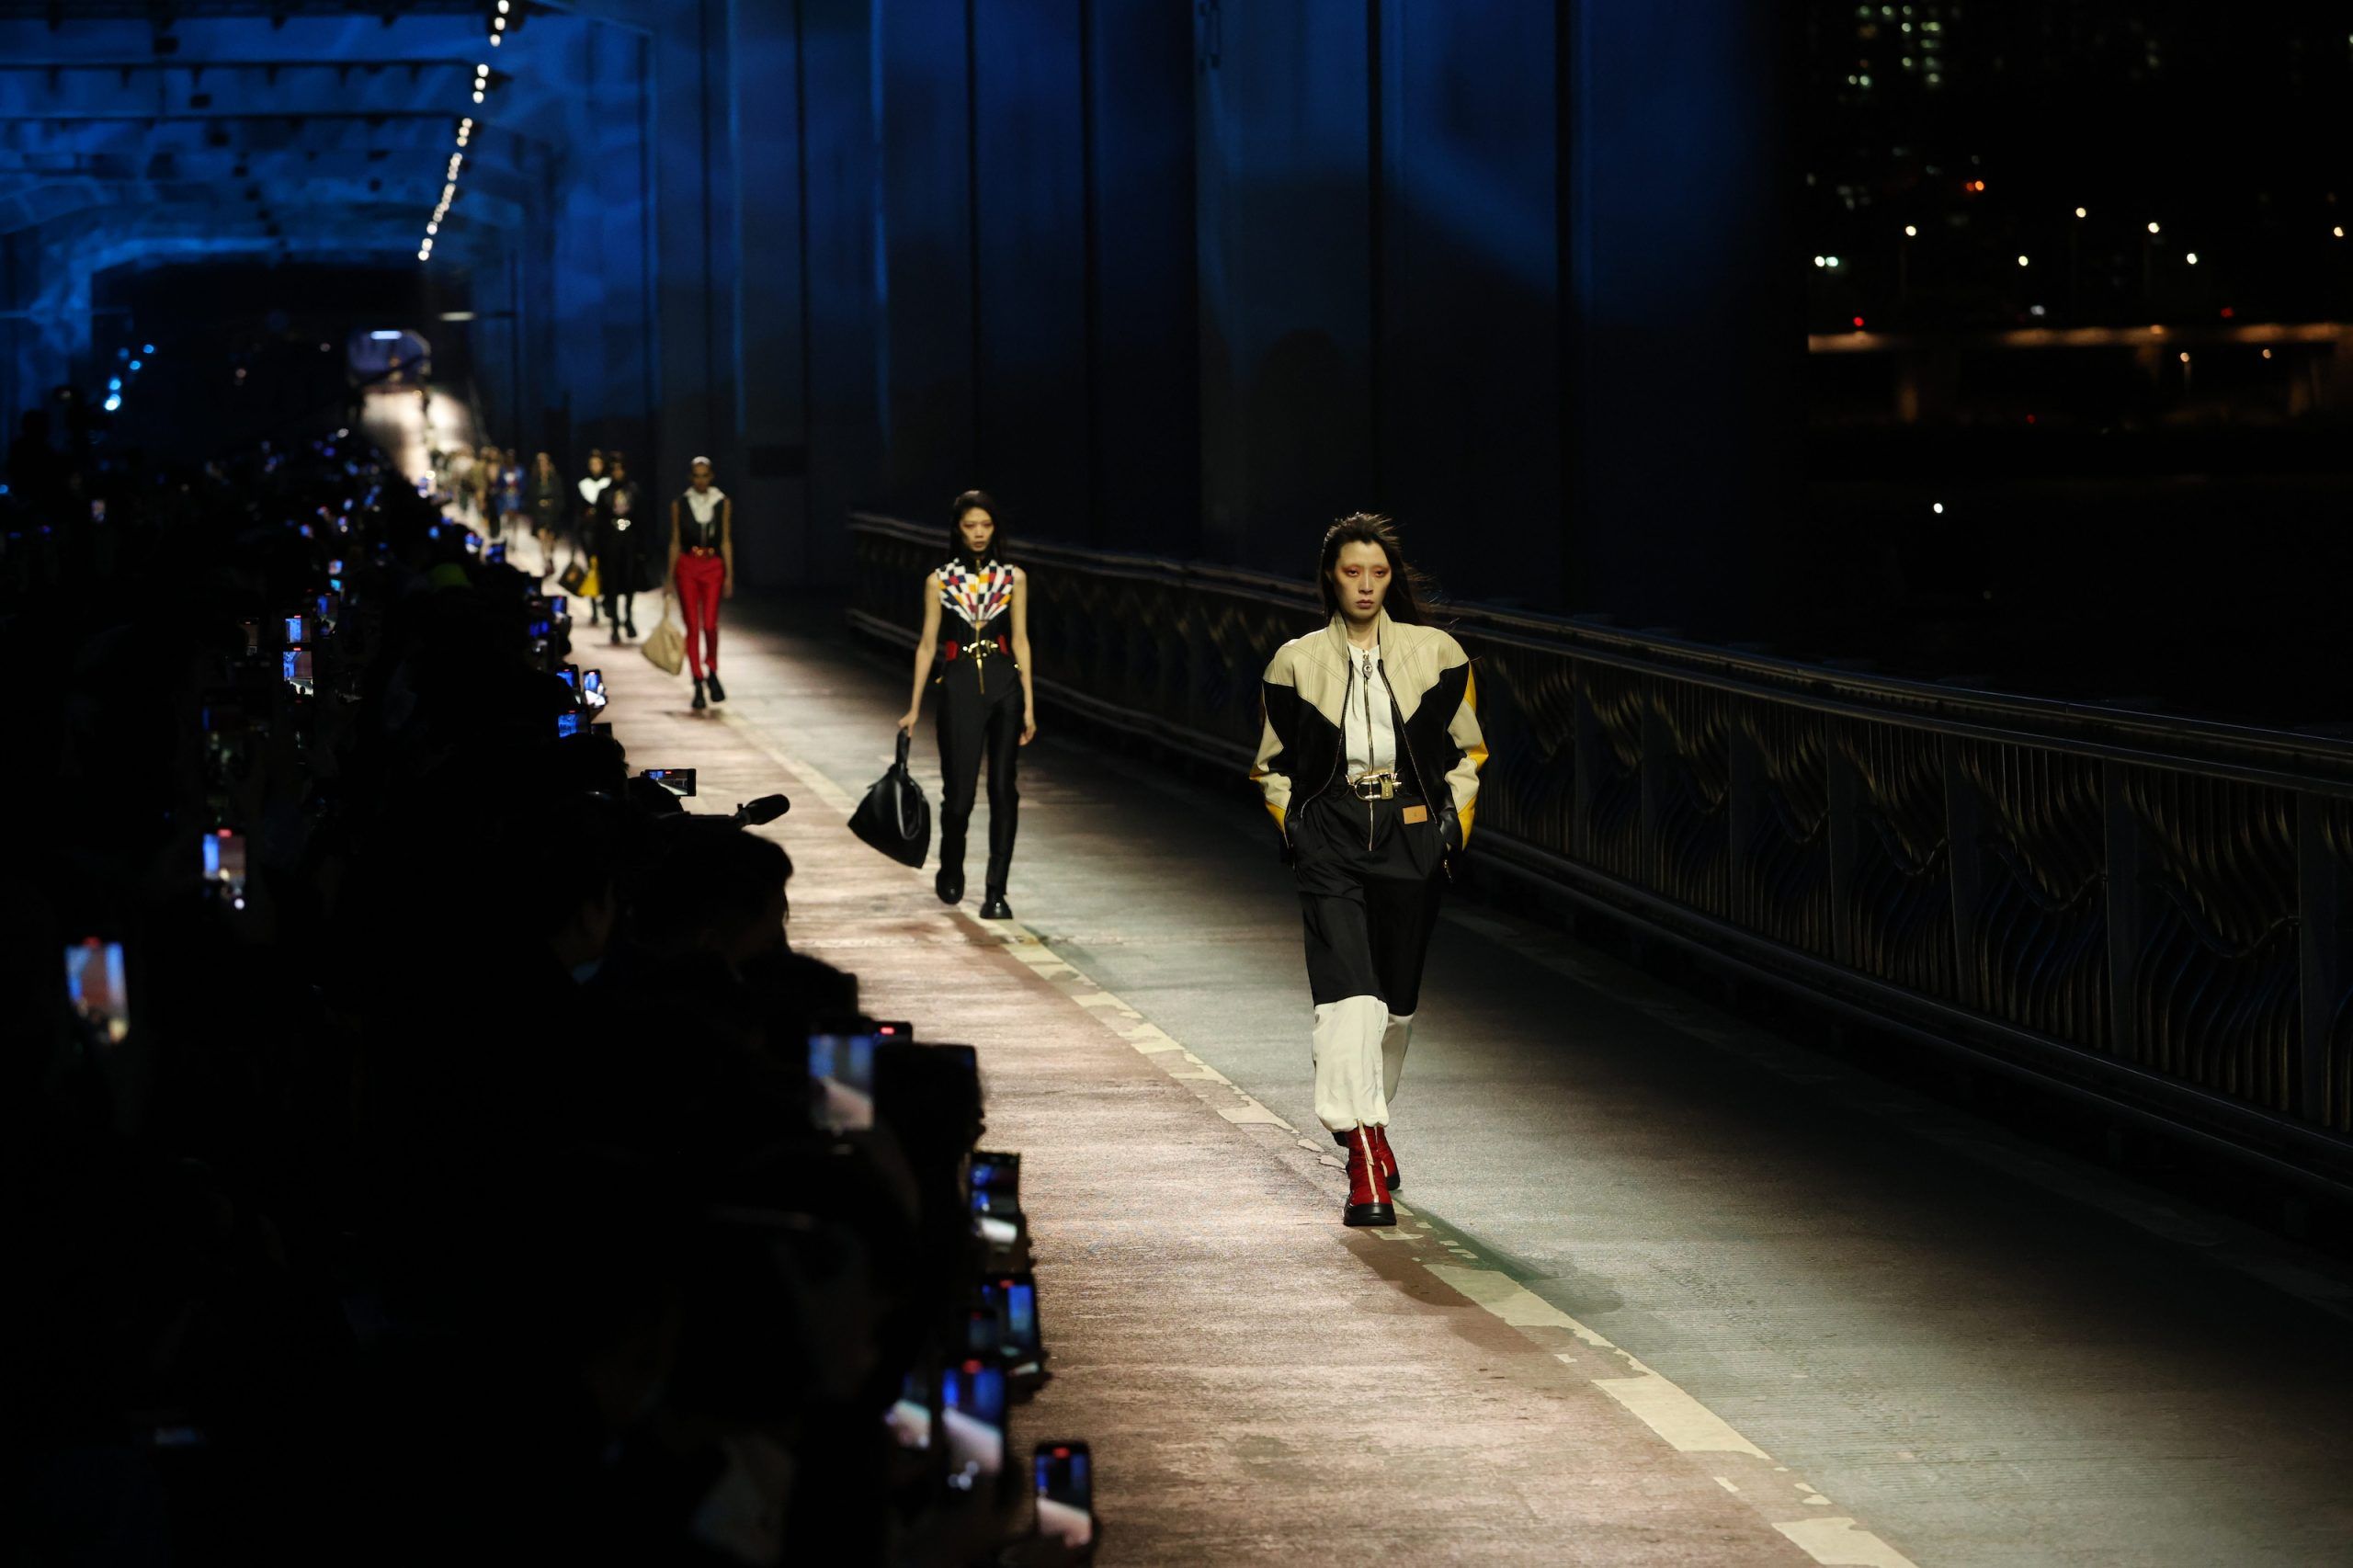 Louis Vuitton to host its first men's prefall show in Hong Kong